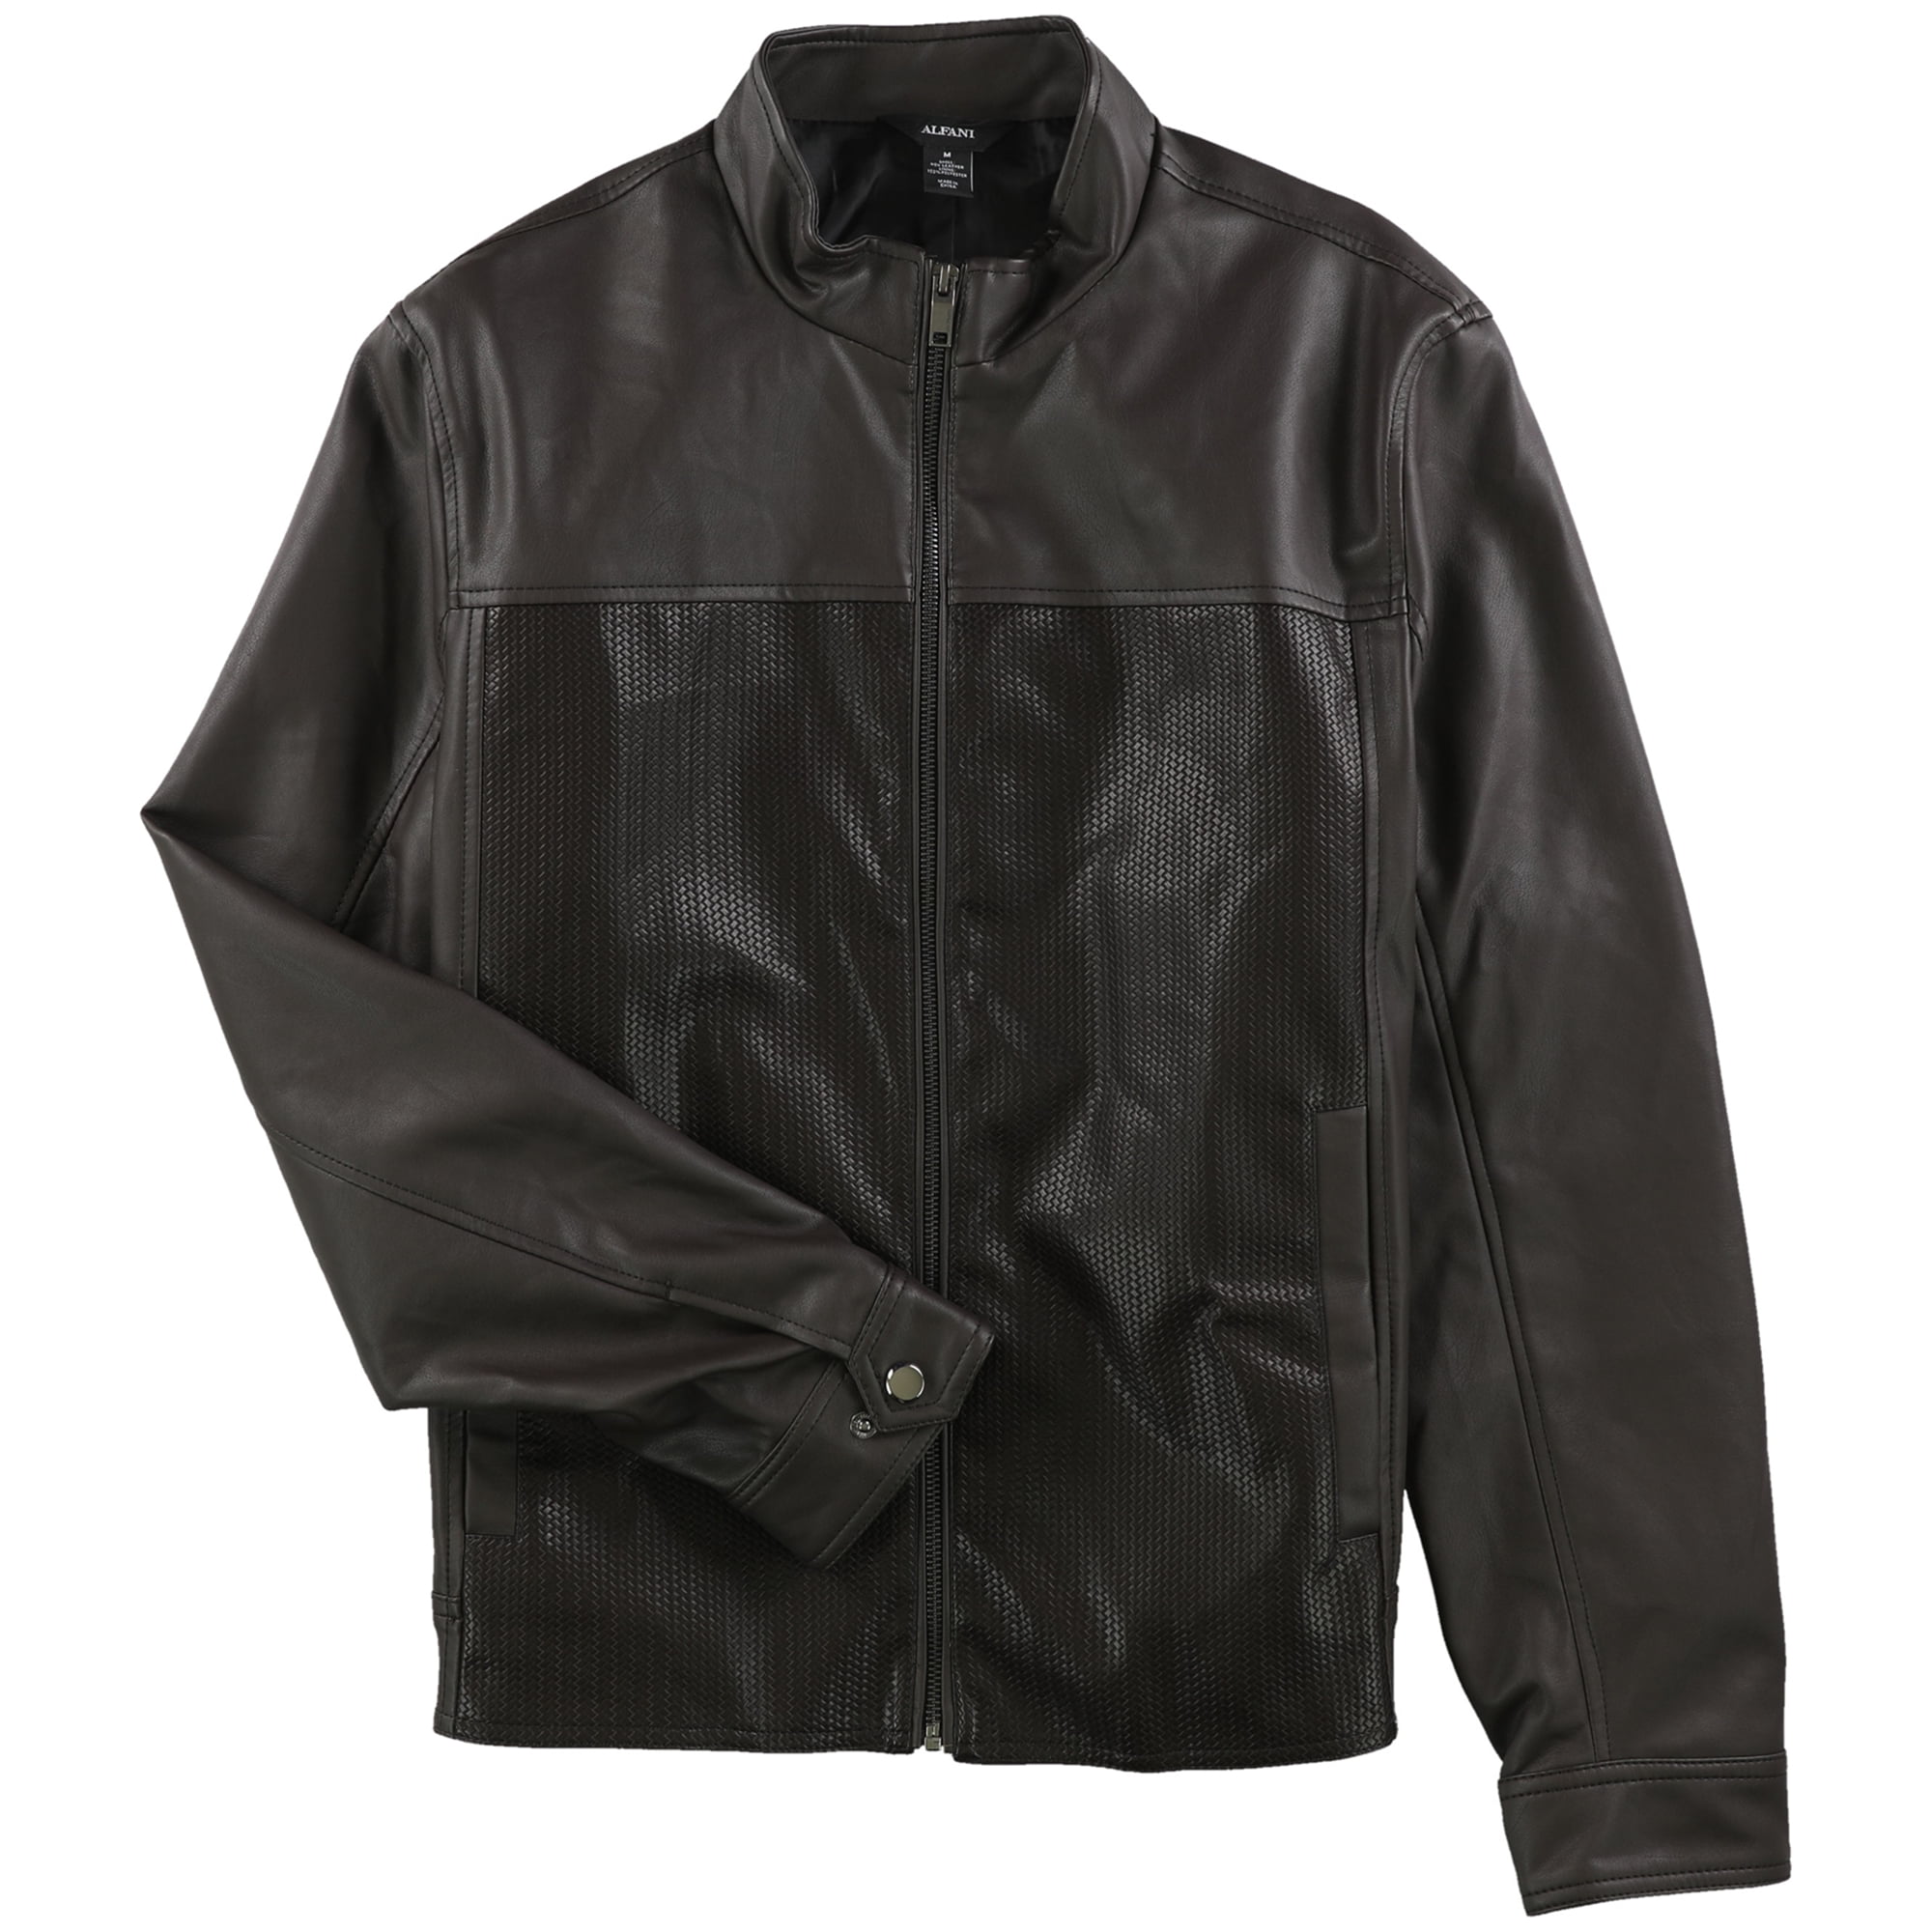 Alfani Mens Faux-Leather Bomber Jacket, Brown, Medium - Walmart.com ...